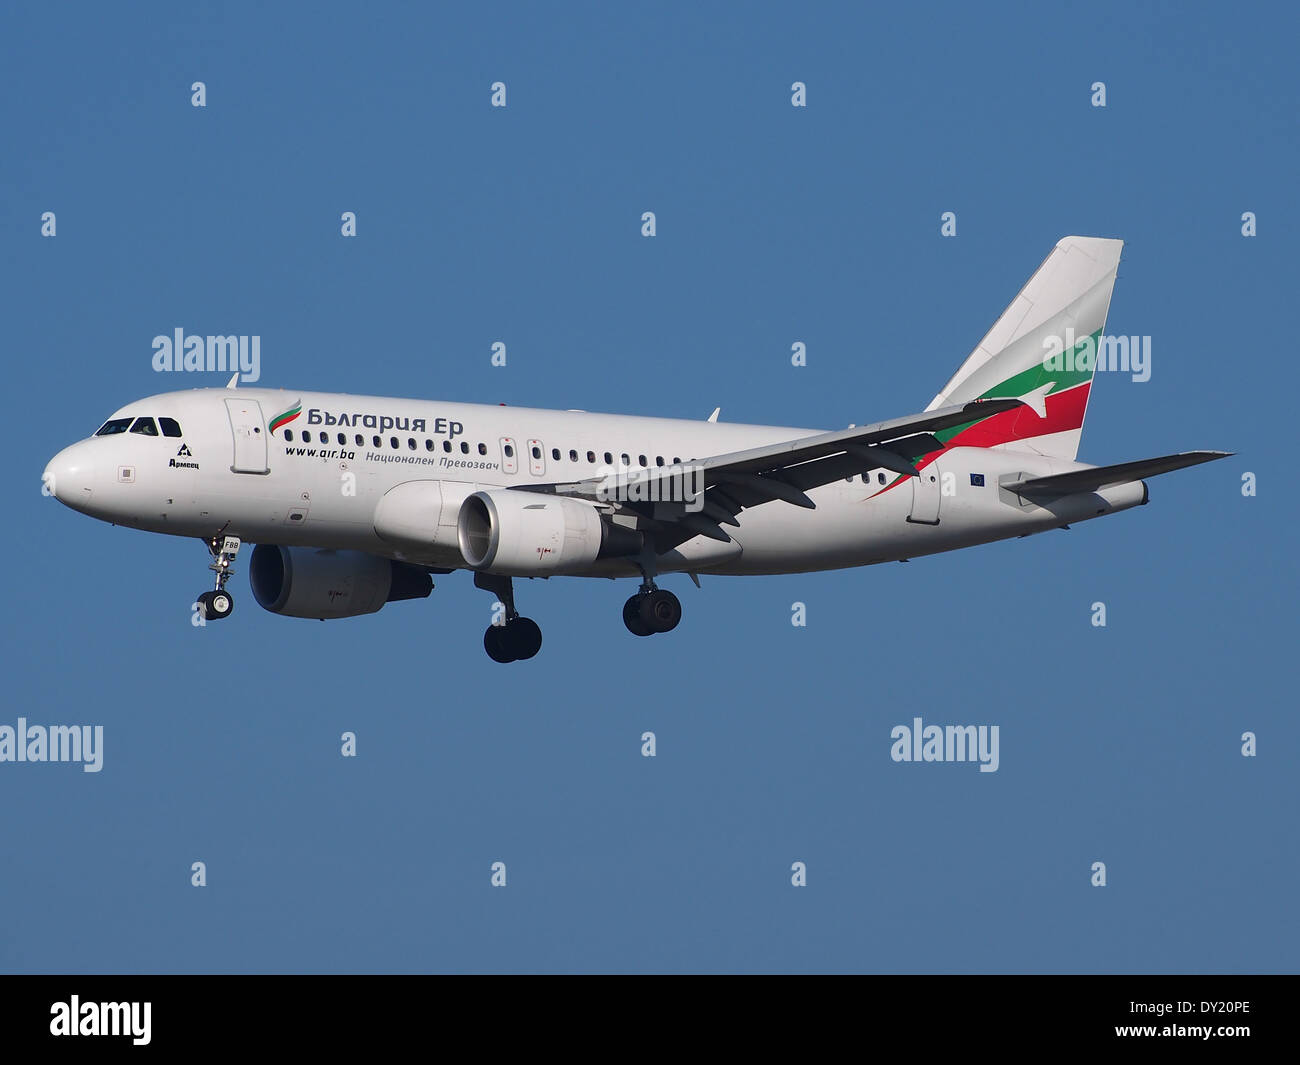 LZ-FBB Bulgarien Air Airbus A319-112, Landung auf dem Flughafen Schiphol (AMS - EHAM), Niederlande, pic3 Stockfoto